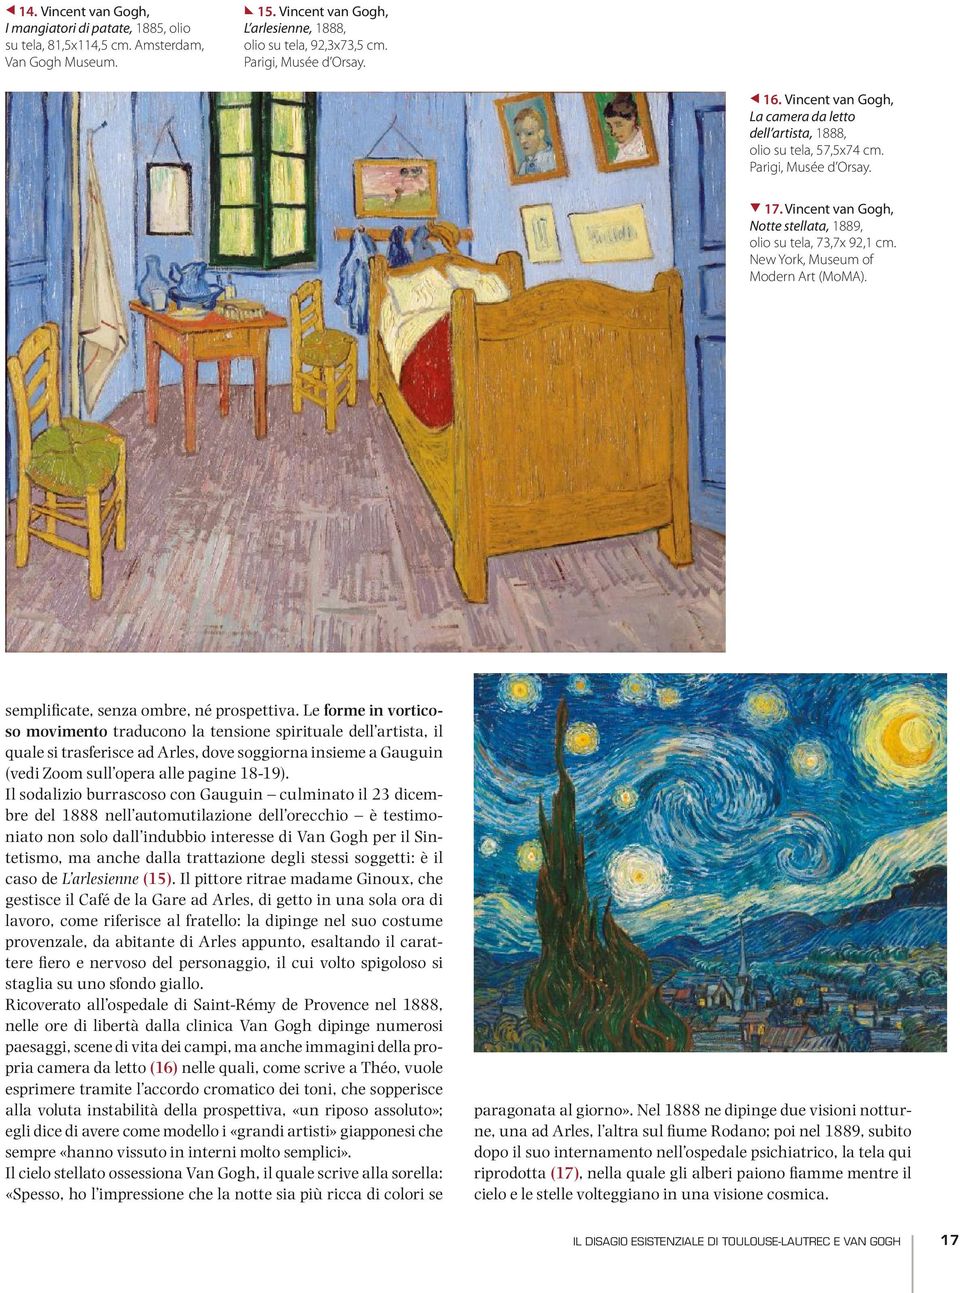 Vincent van Gogh, Notte stellata, 1889, olio su tela, 73,7x 92,1 cm. New York, Museum of Modern Art (MoMA). semplifcate, senza ombre, né prospettiva.